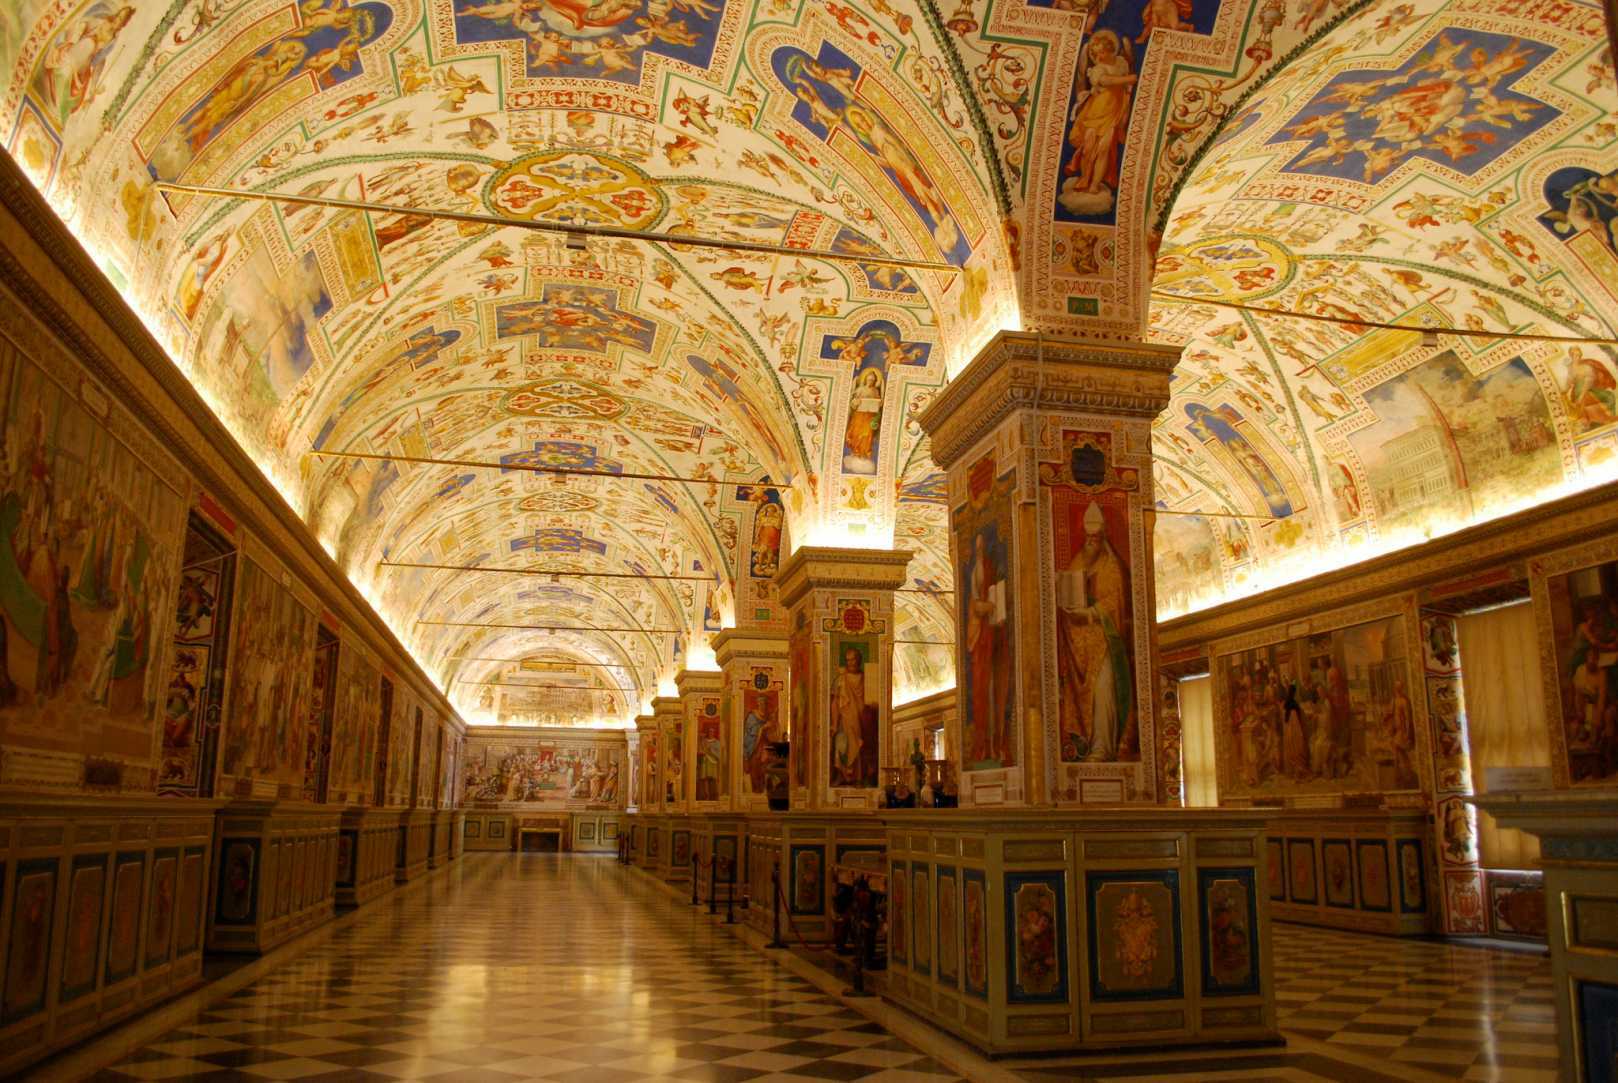 El museo del vaticano